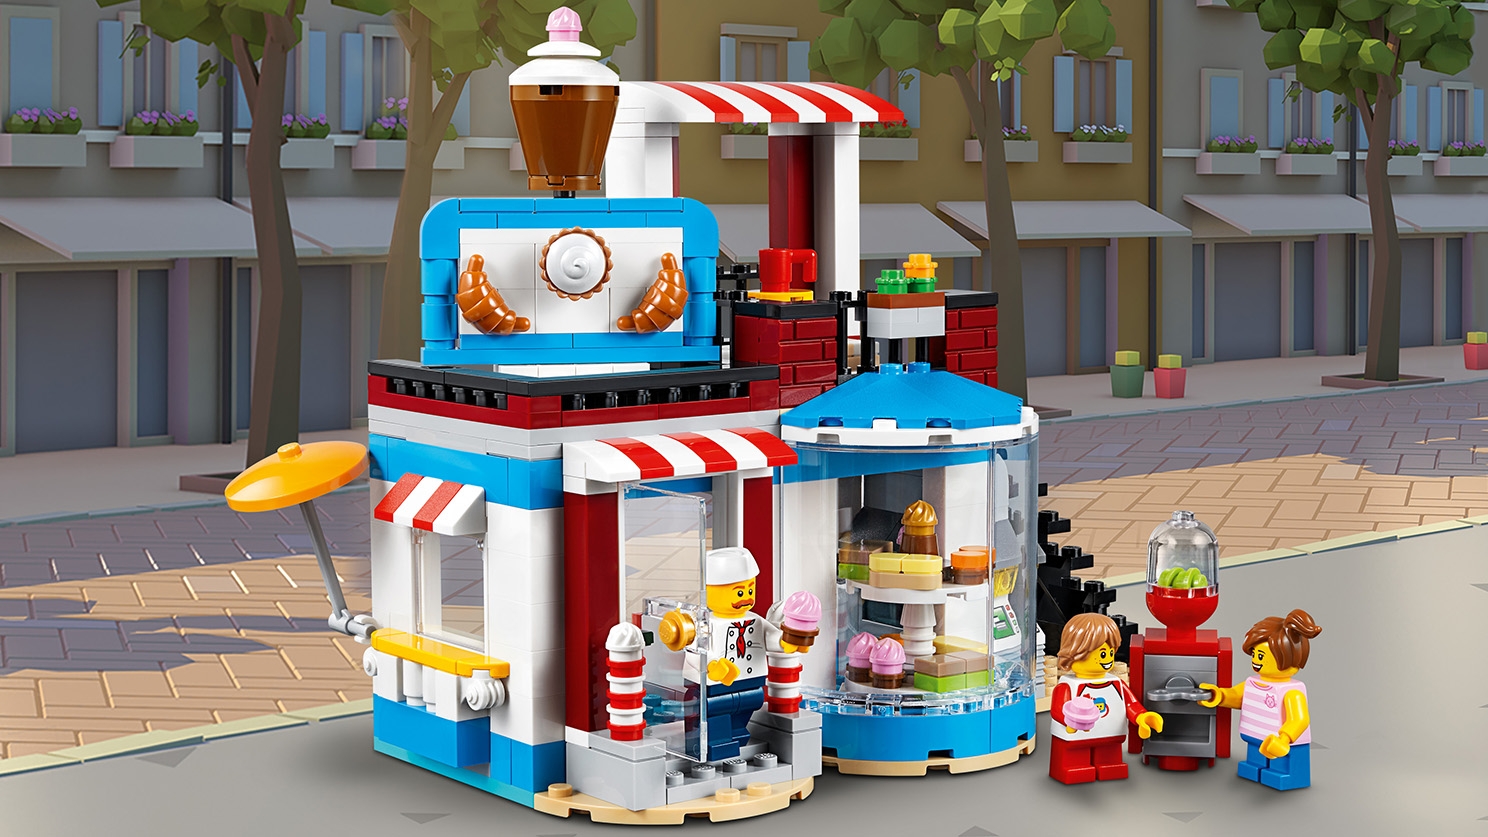 Modular Sweet Surprises 31077 - LEGO® Creator Sets - LEGO.com for kids